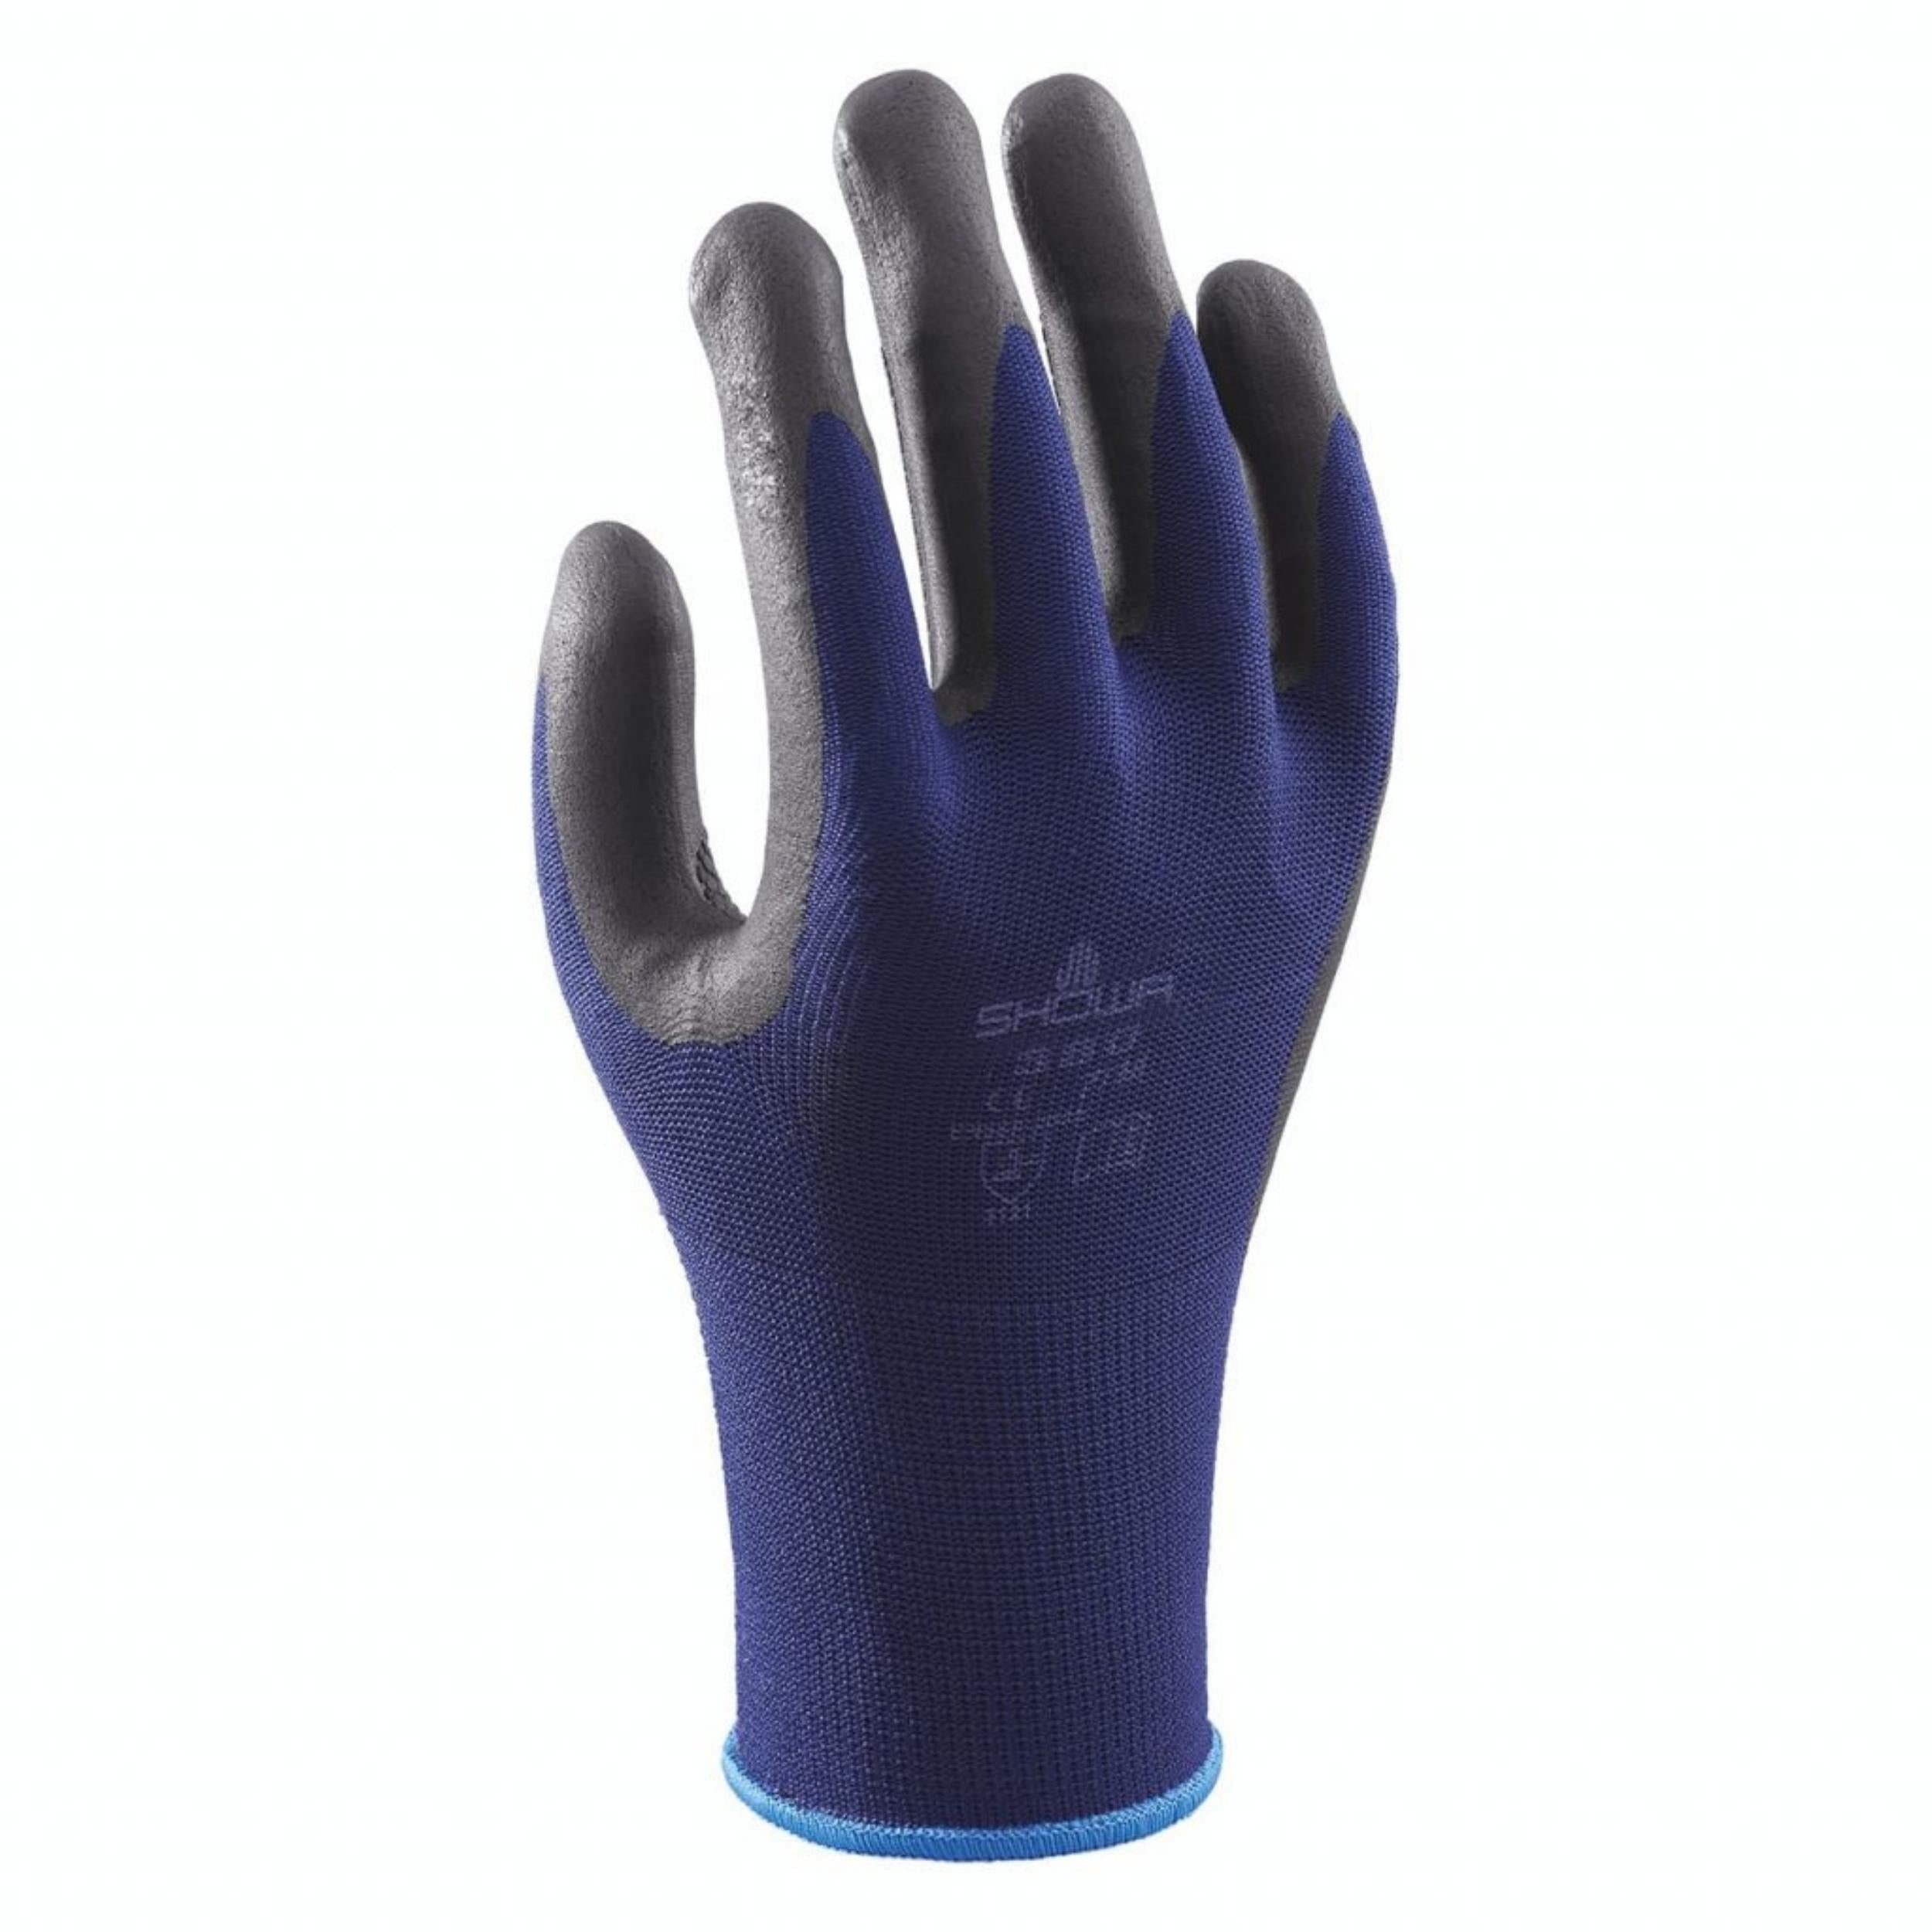 SHOWA 380 : General-purpose Gloves 6 Pack